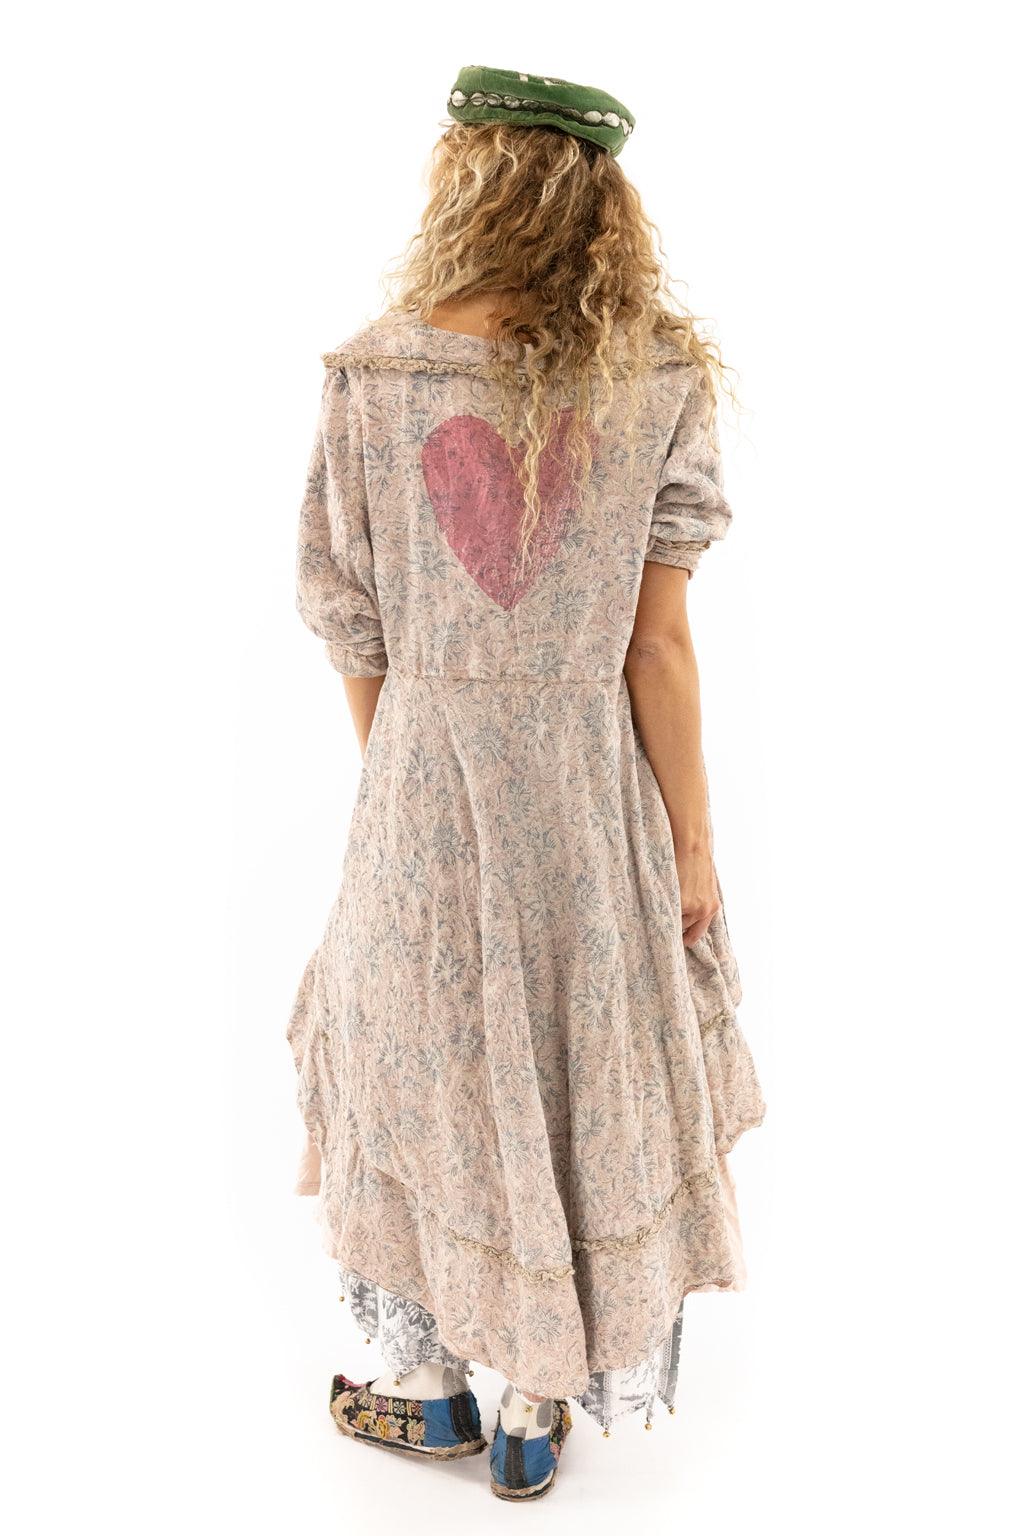 Season Of Love Lyudmila Jacket - Magnolia Pearl Clothing